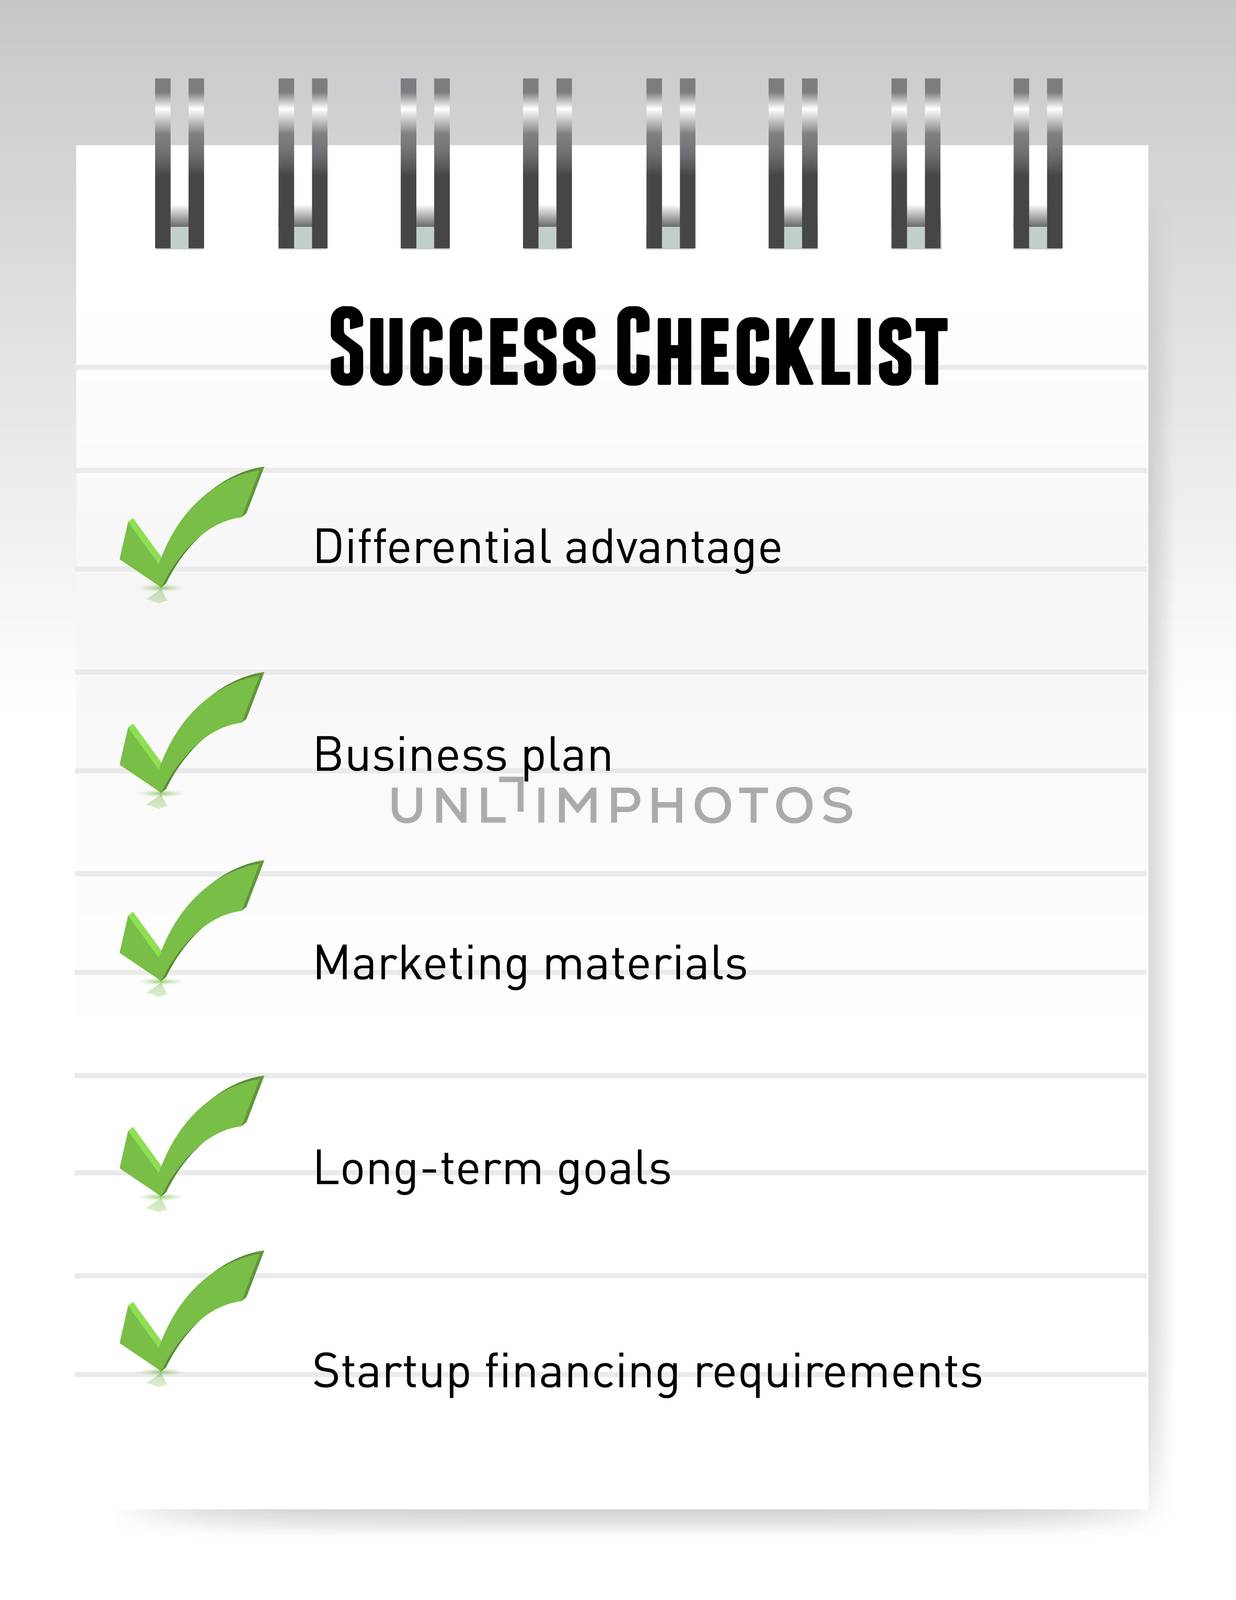 Success checklist notepad illustration design on white